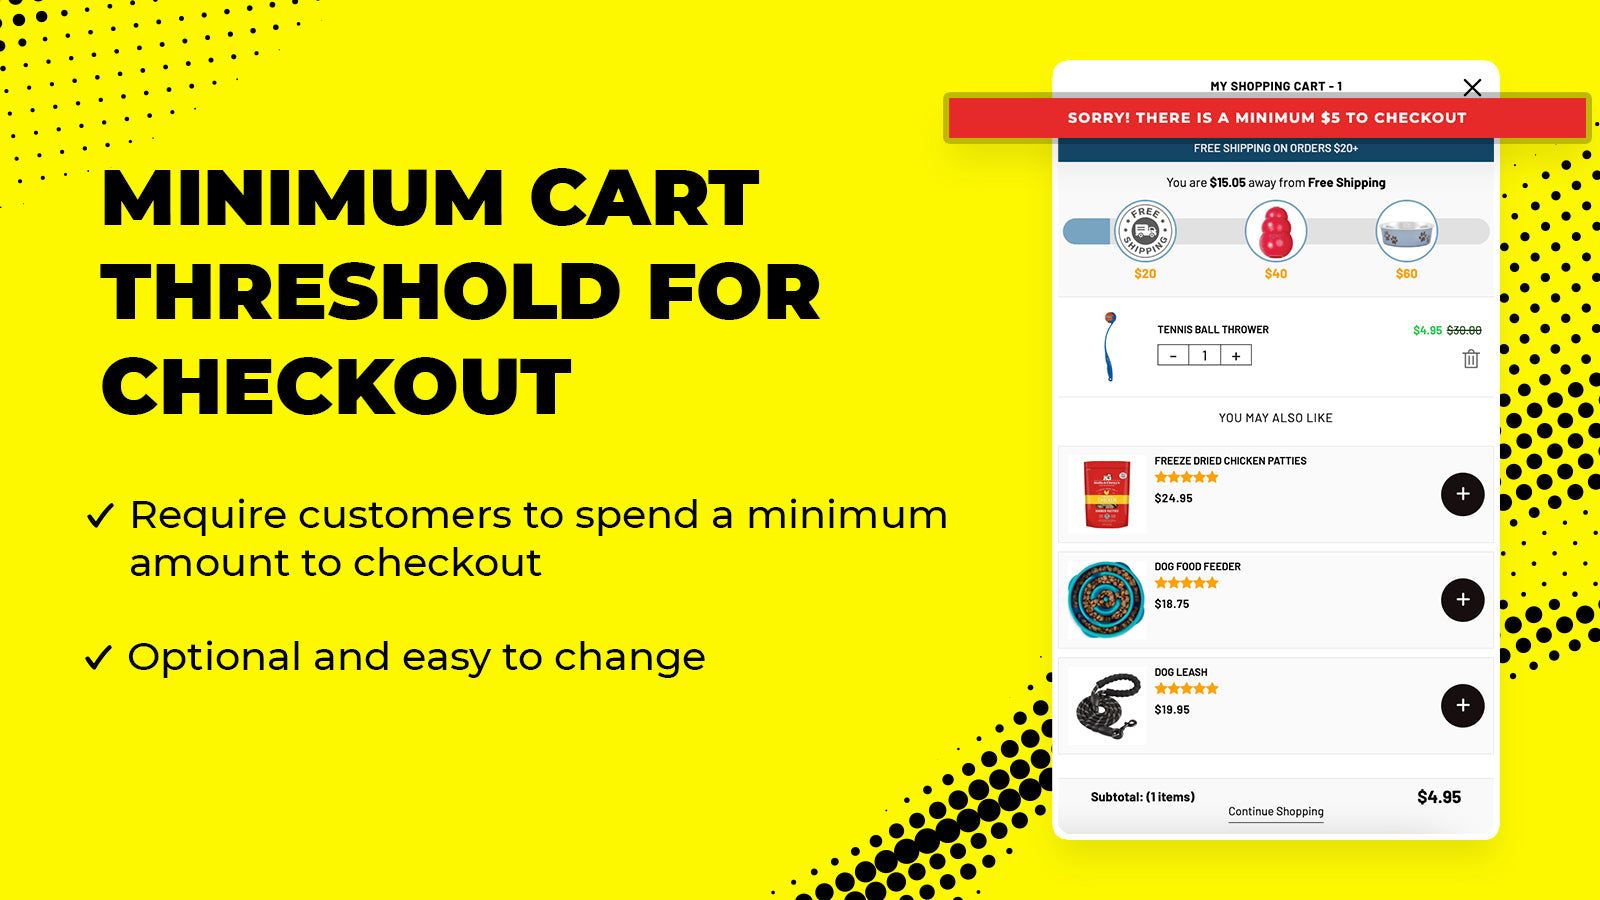 Minimum cart threshold for checkout